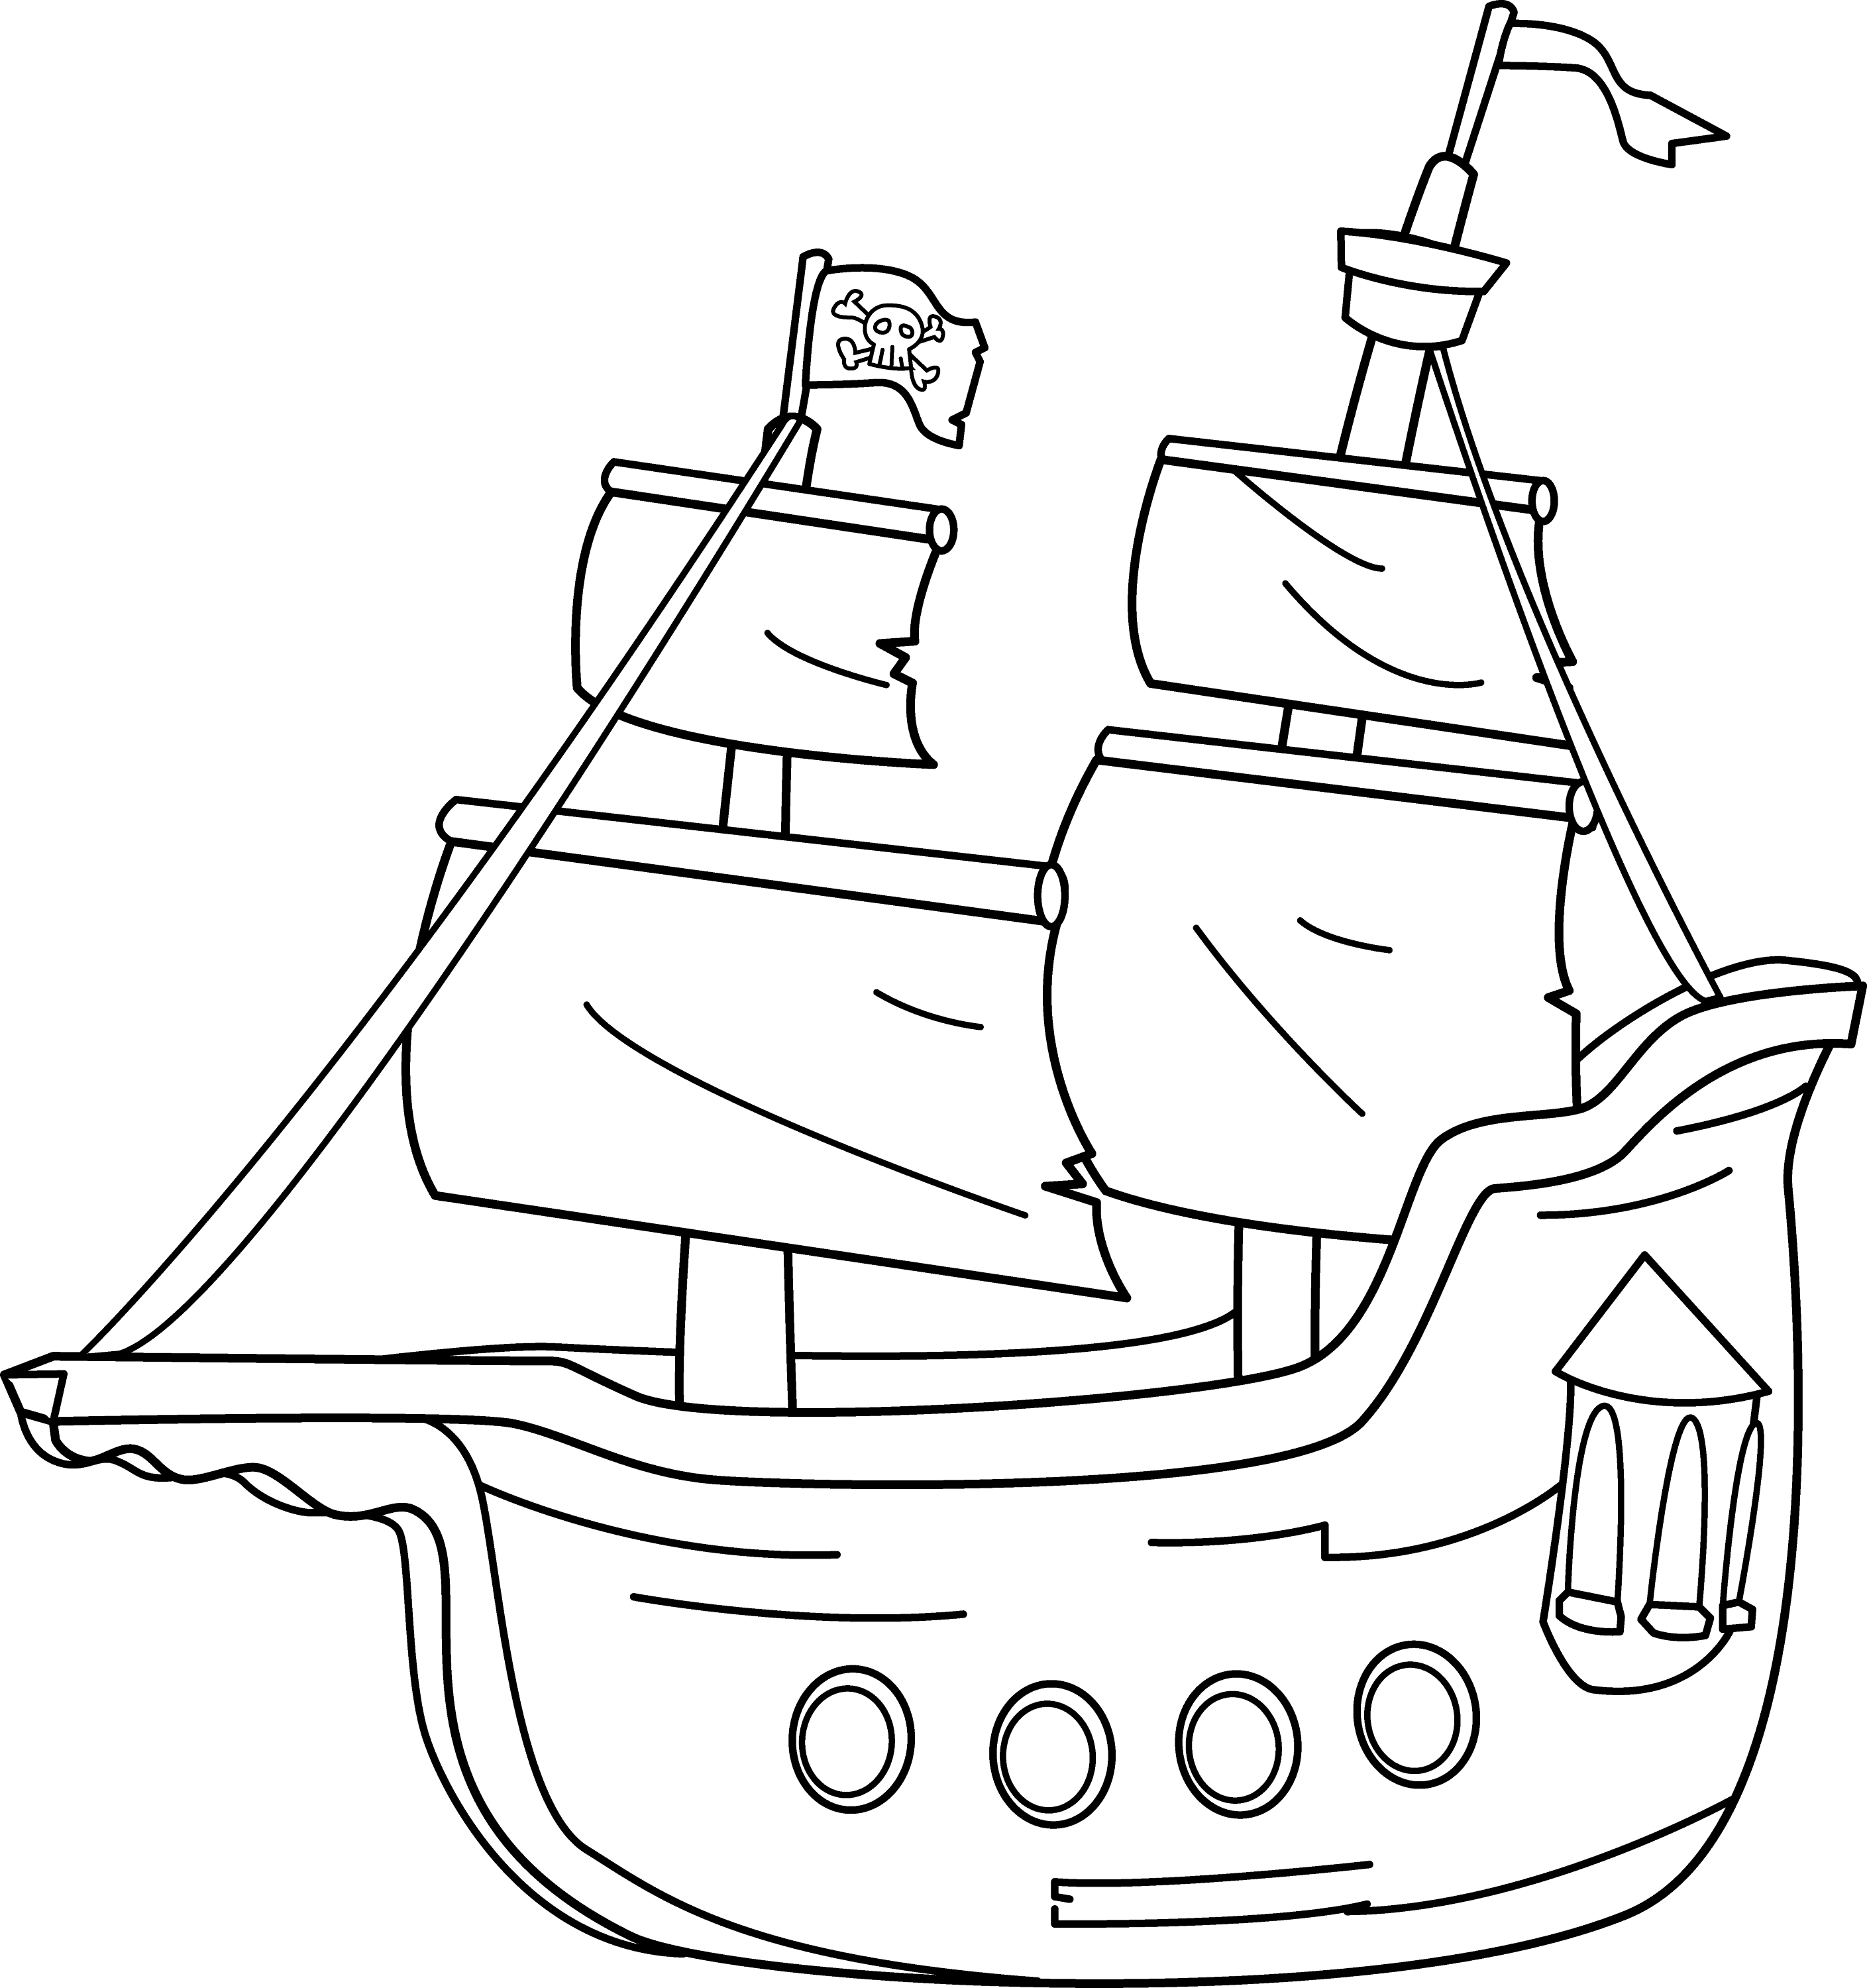 sail-boat-coloring-page